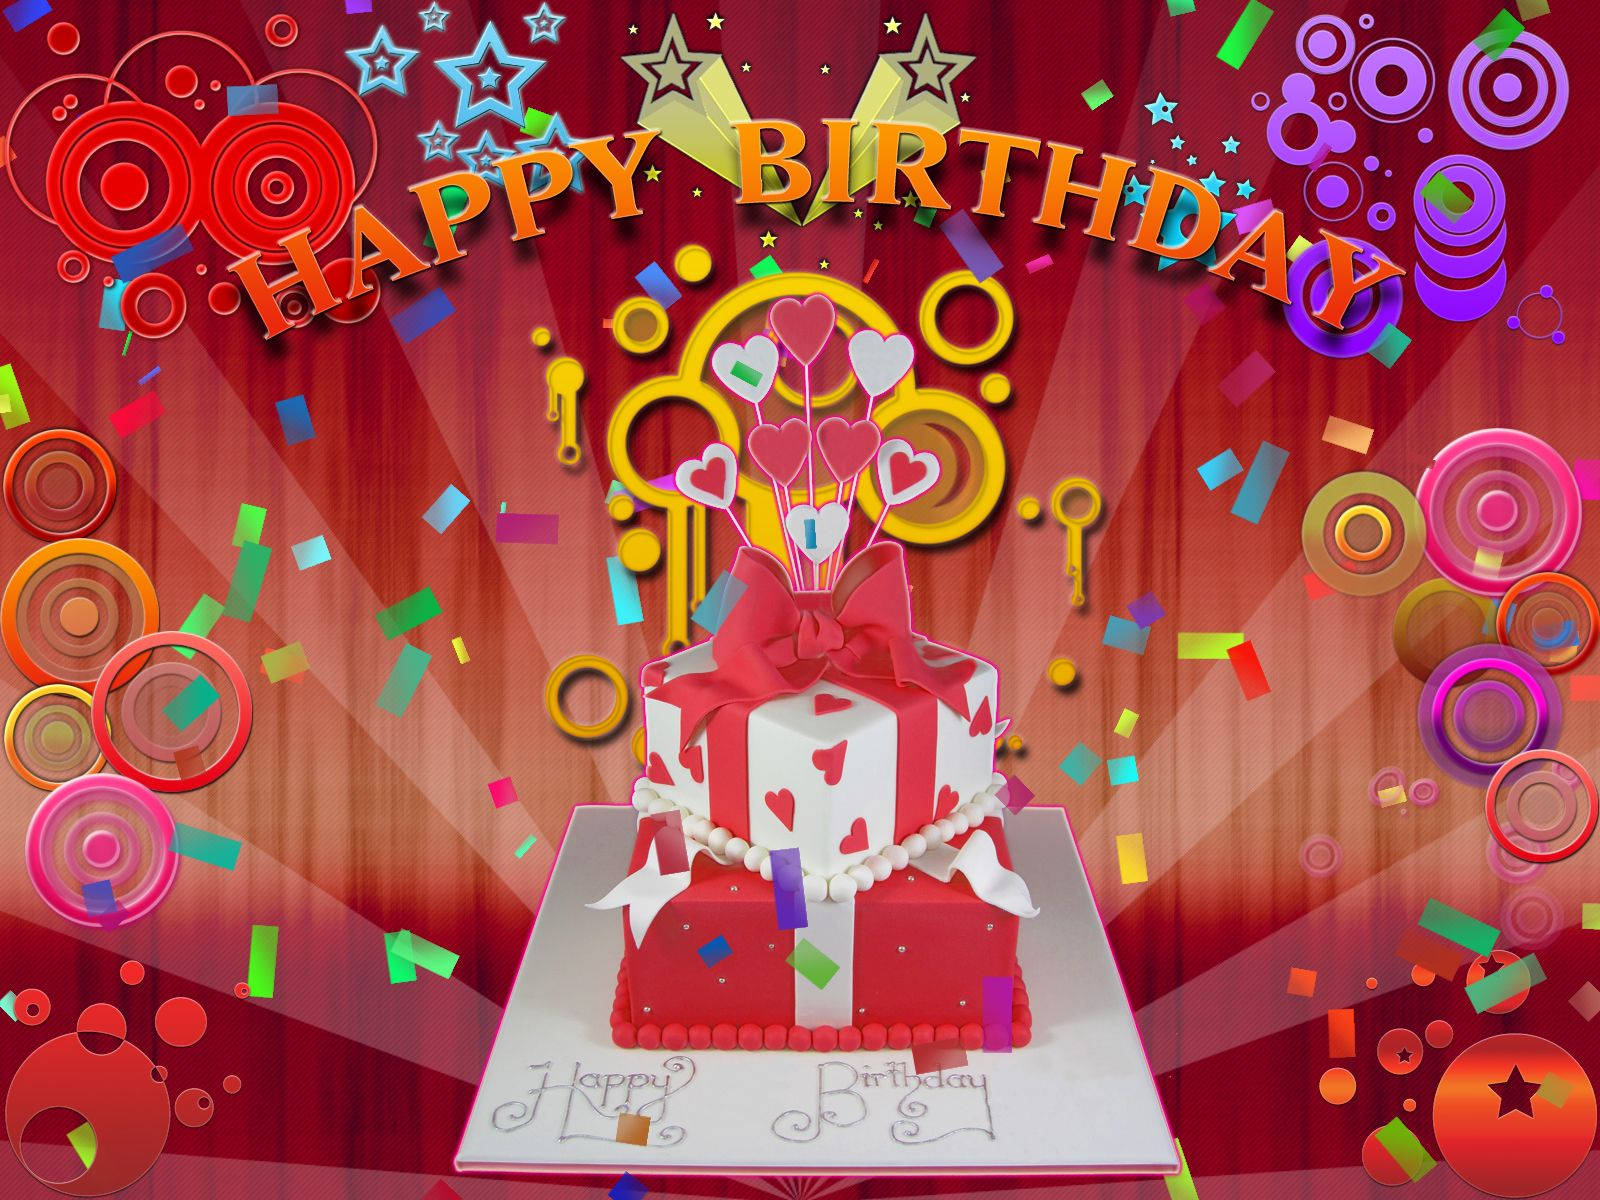 Happy Birthday Digital Art Wallpaper